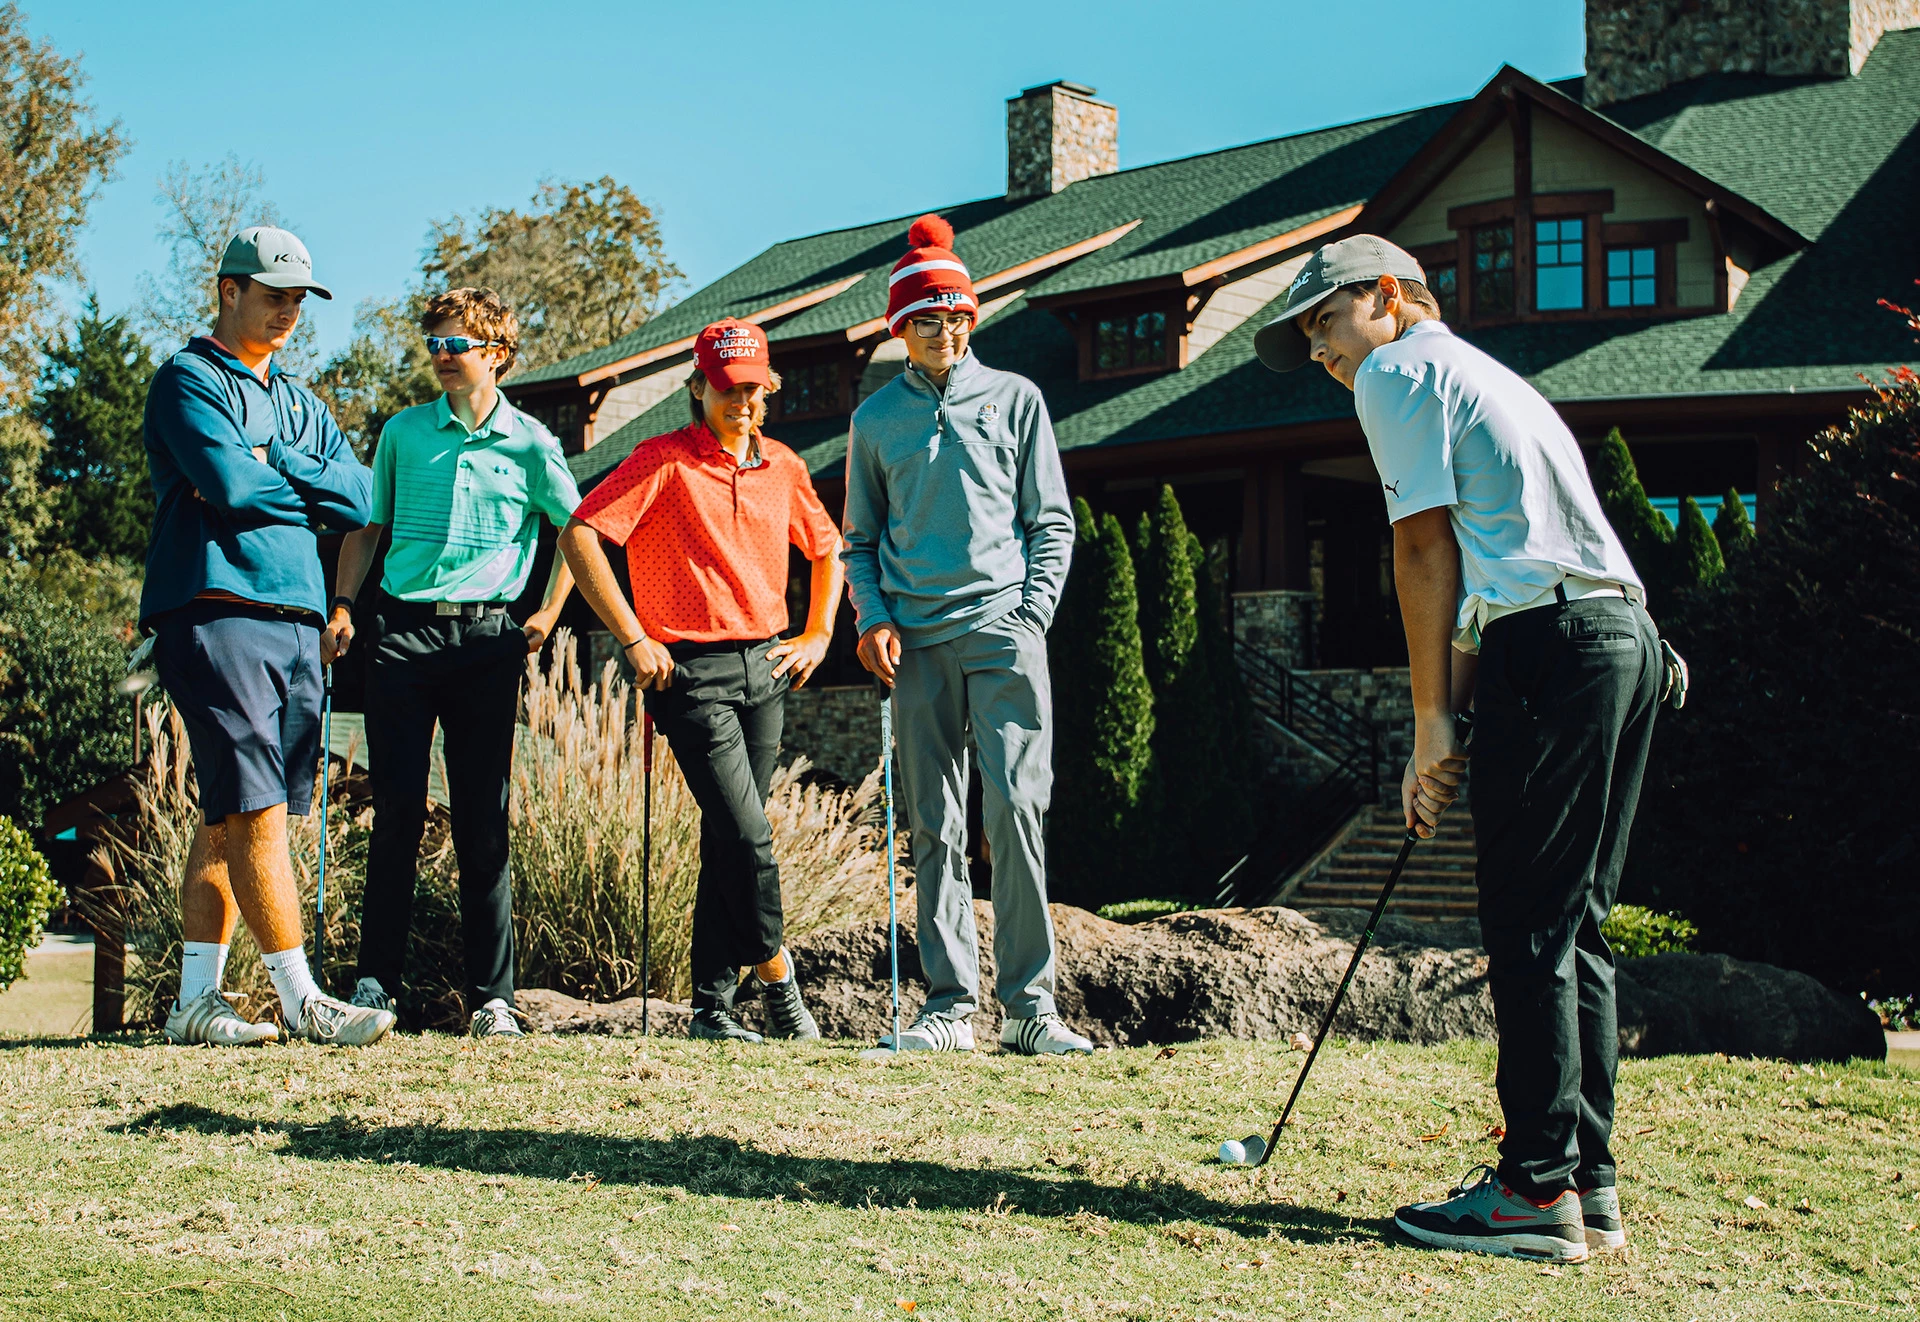 Firethorne - Junior Golfers